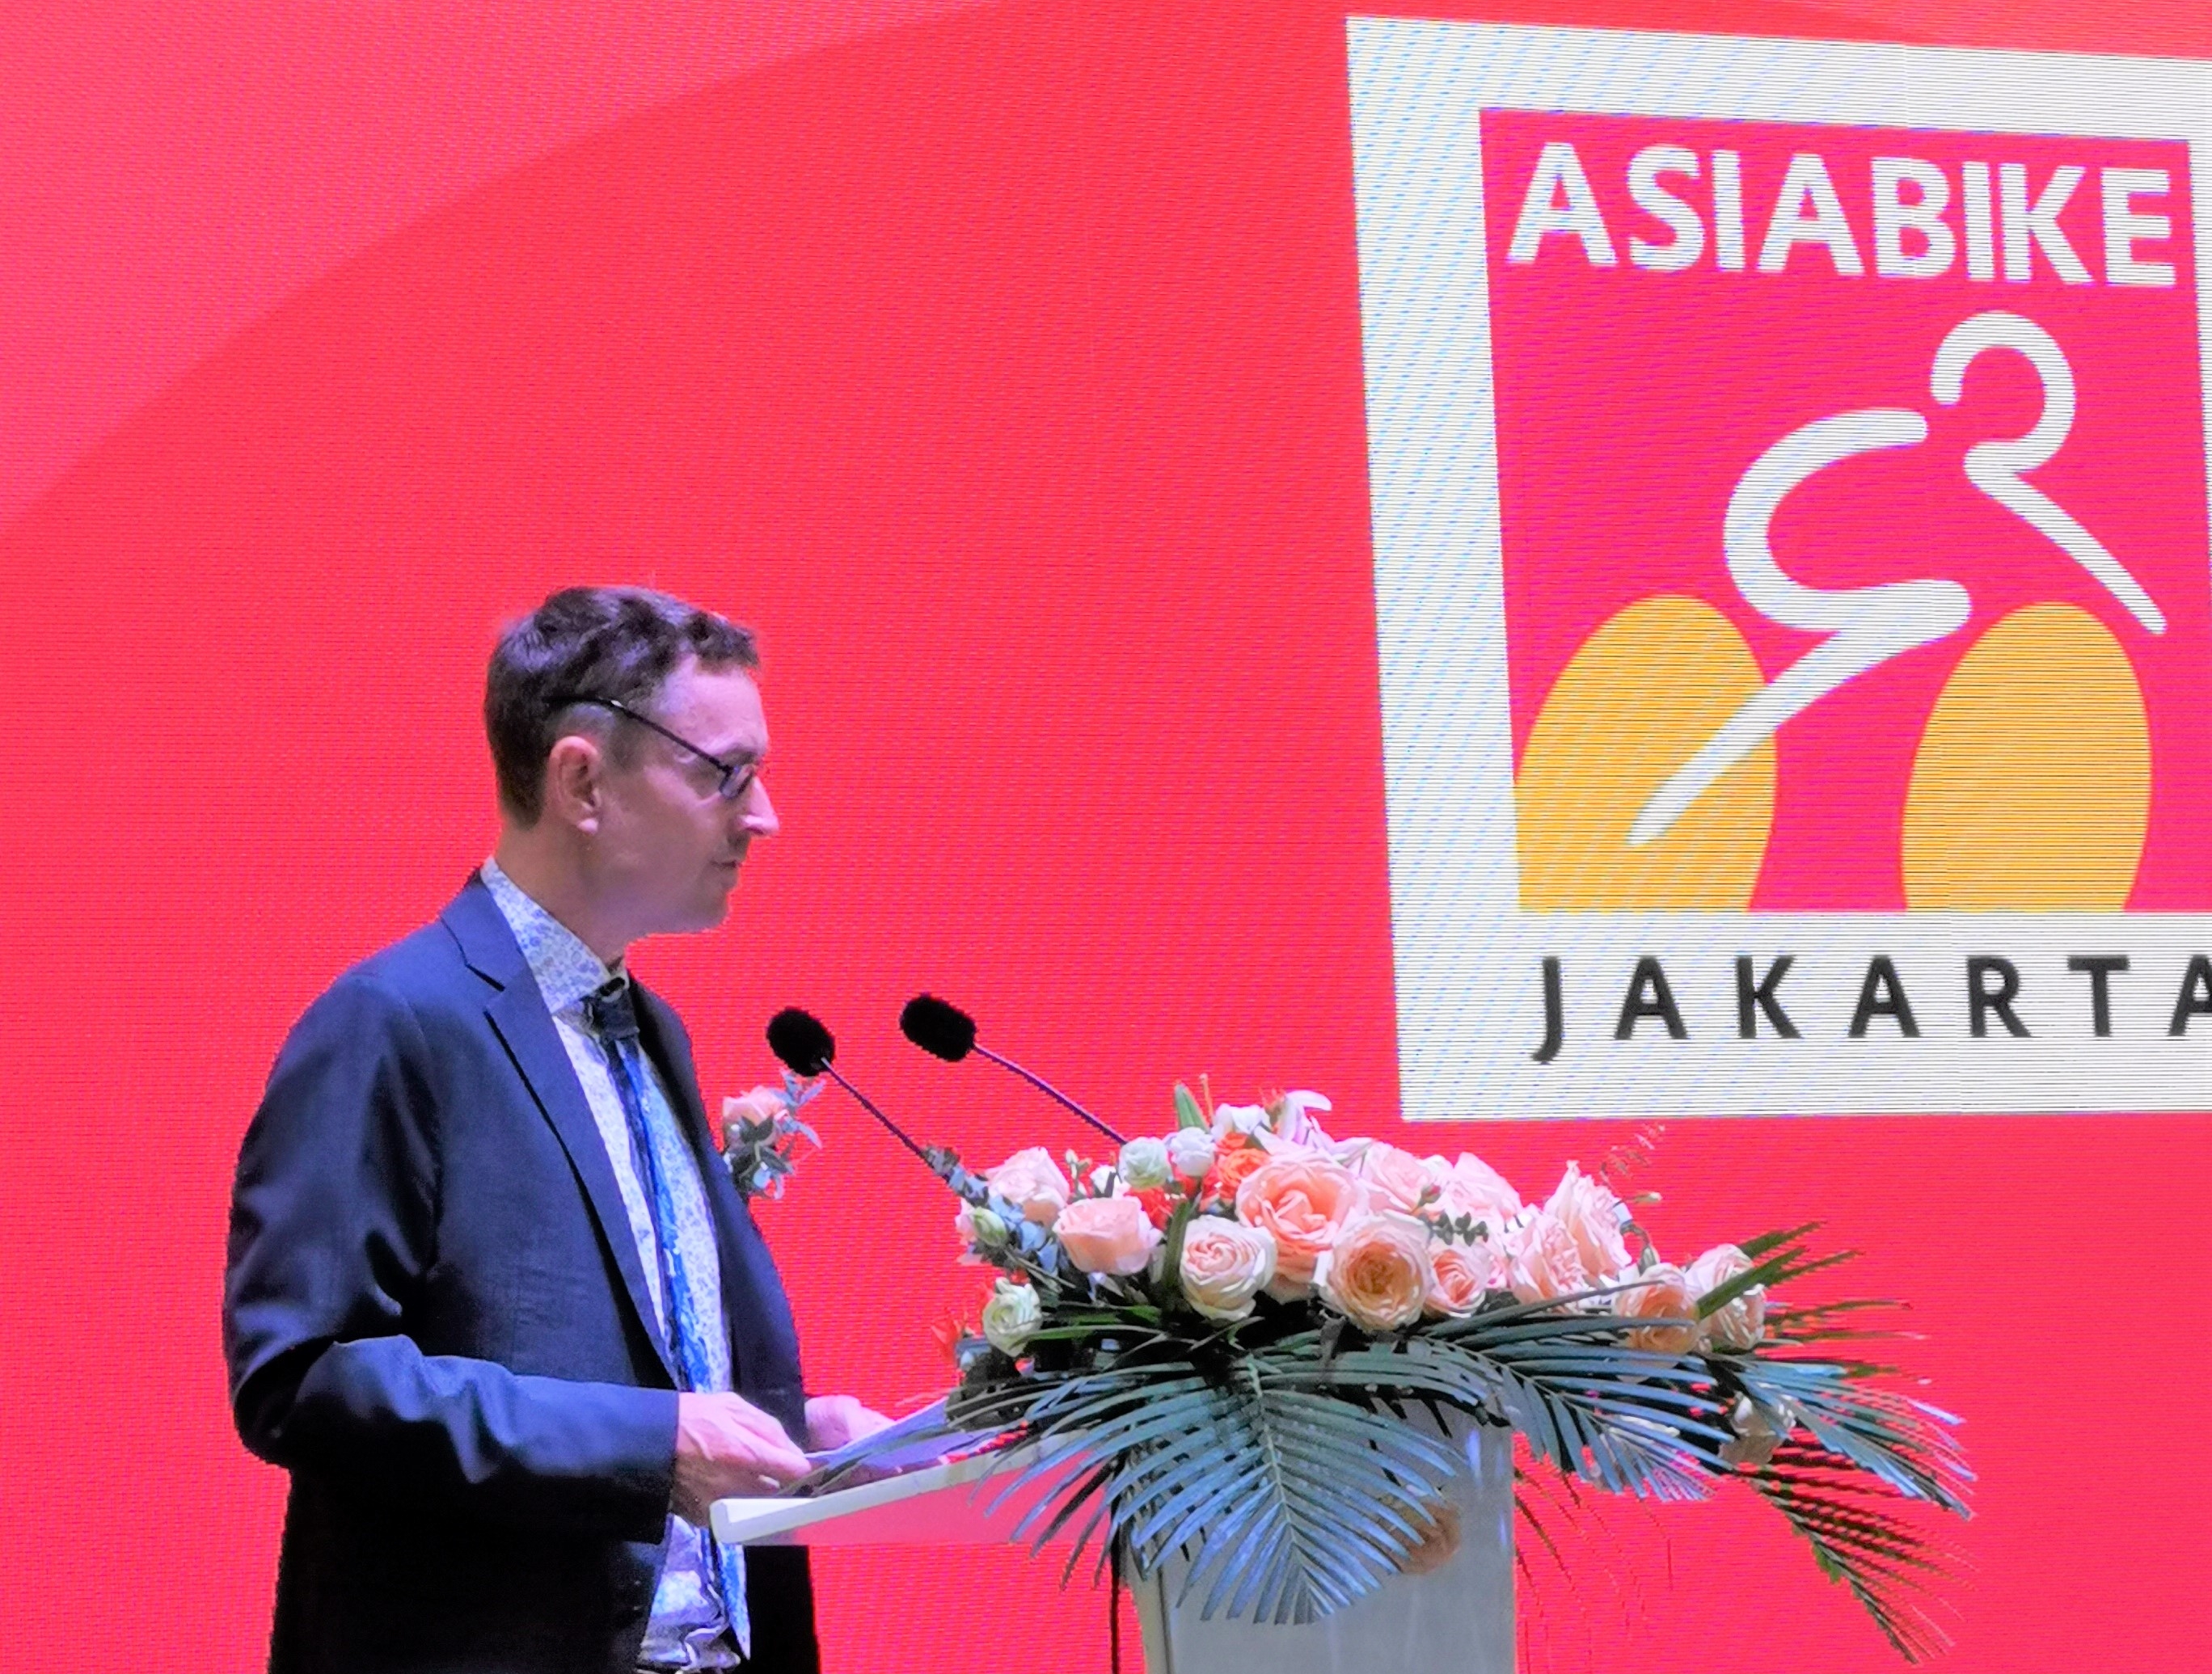 ABJ Asiabike Jakarta press conference 05